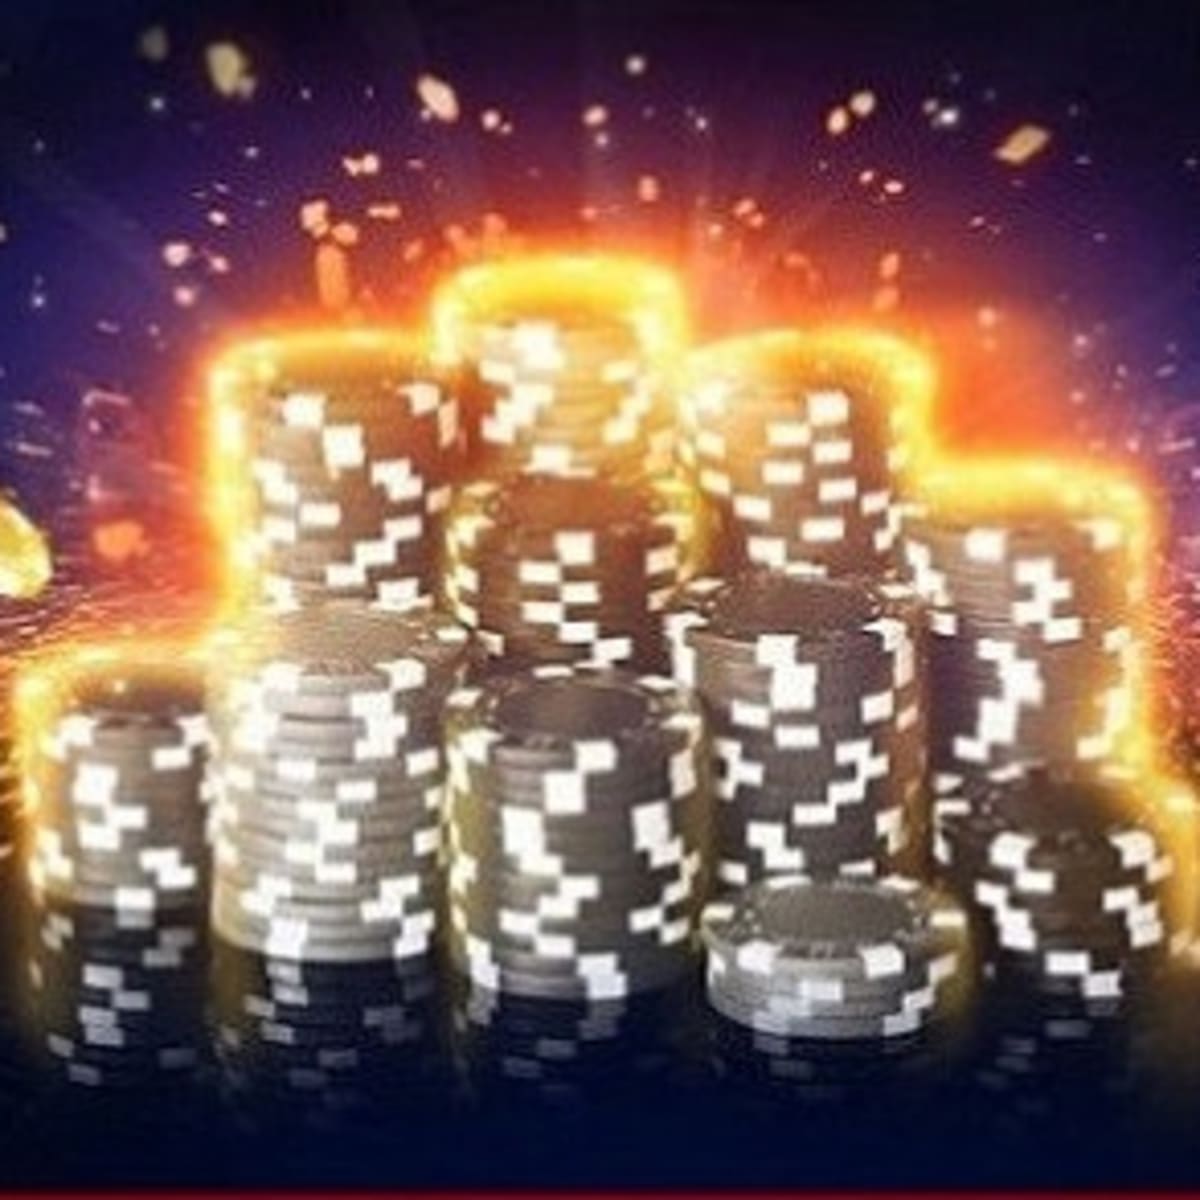 Poker heat free chips 2020 schedule